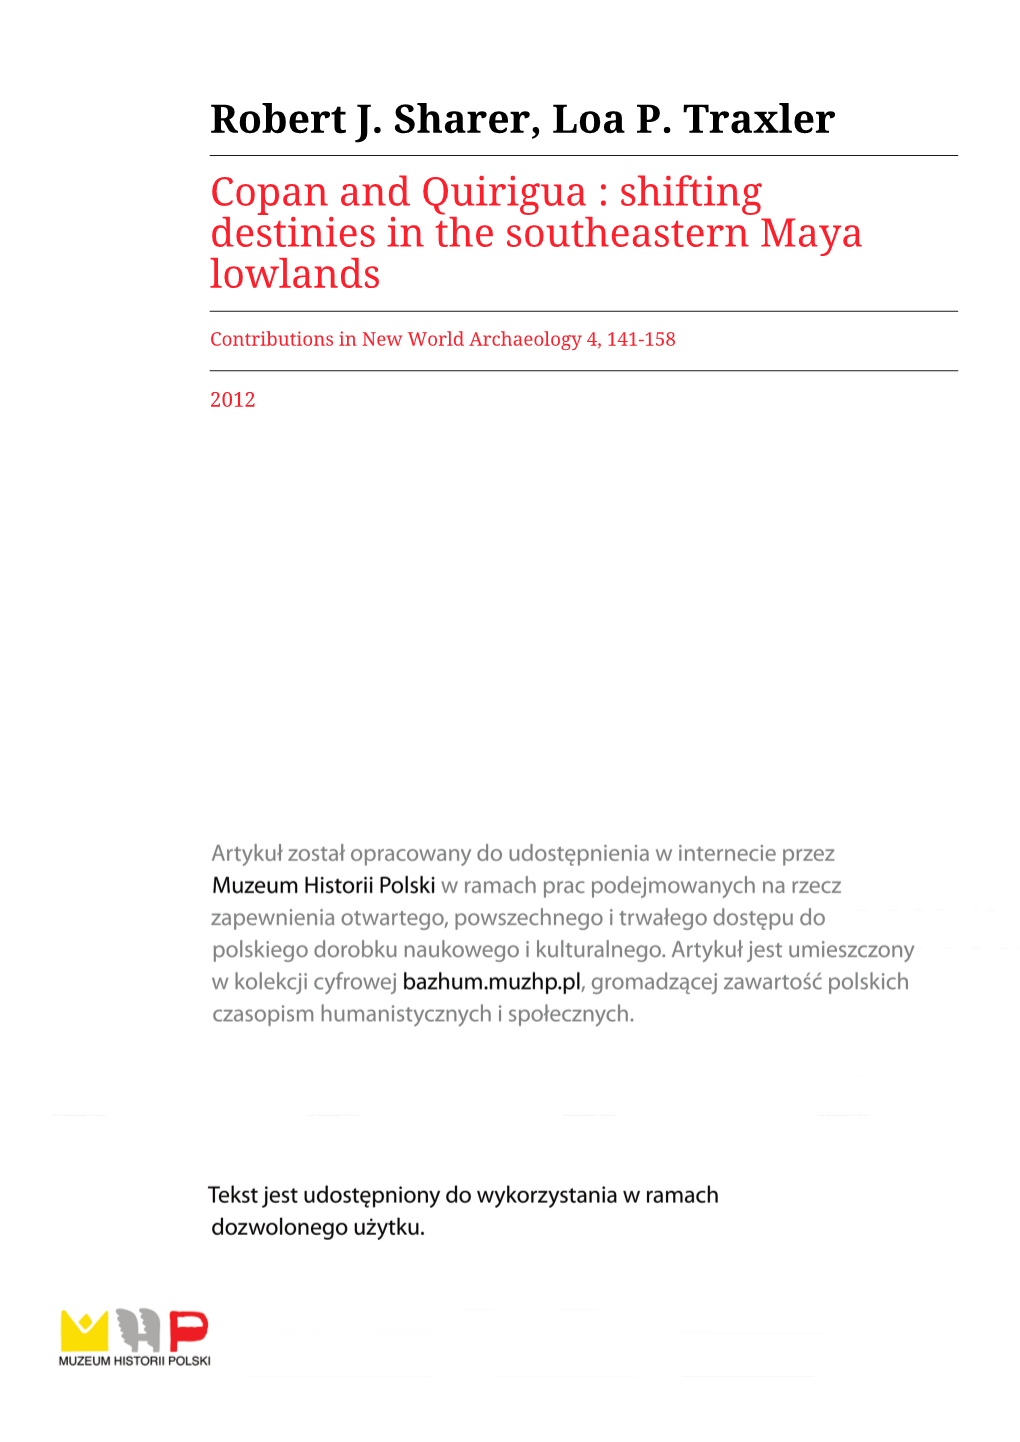 Robert J. Sharer, Loa P. Traxler Copan and Quirigua : Shifting Destinies in the Southeastern Maya Lowlands